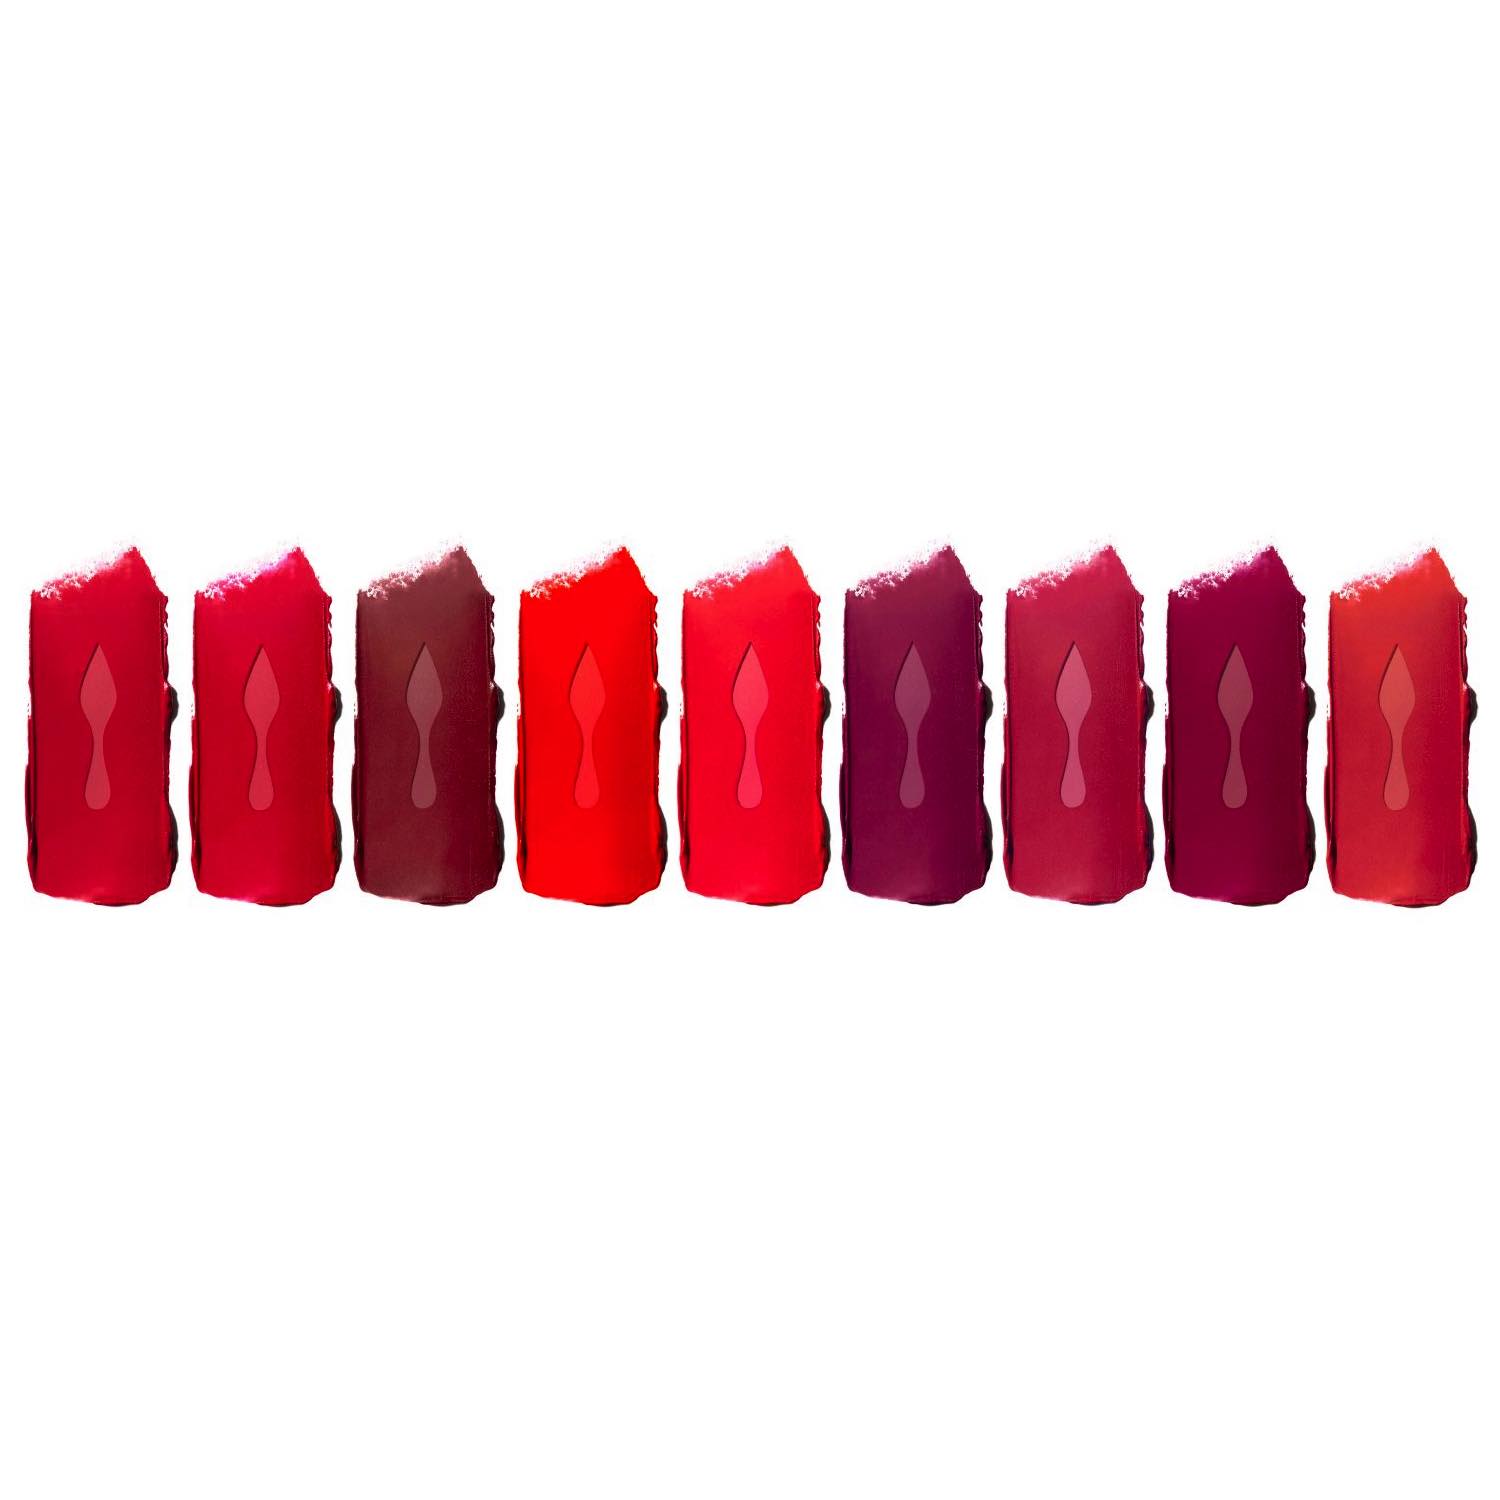 CHRISTIAN LOUBOUTIN Matte Fluid Lip Colour Liquid Lipstick Swatches Shades Colors Farben